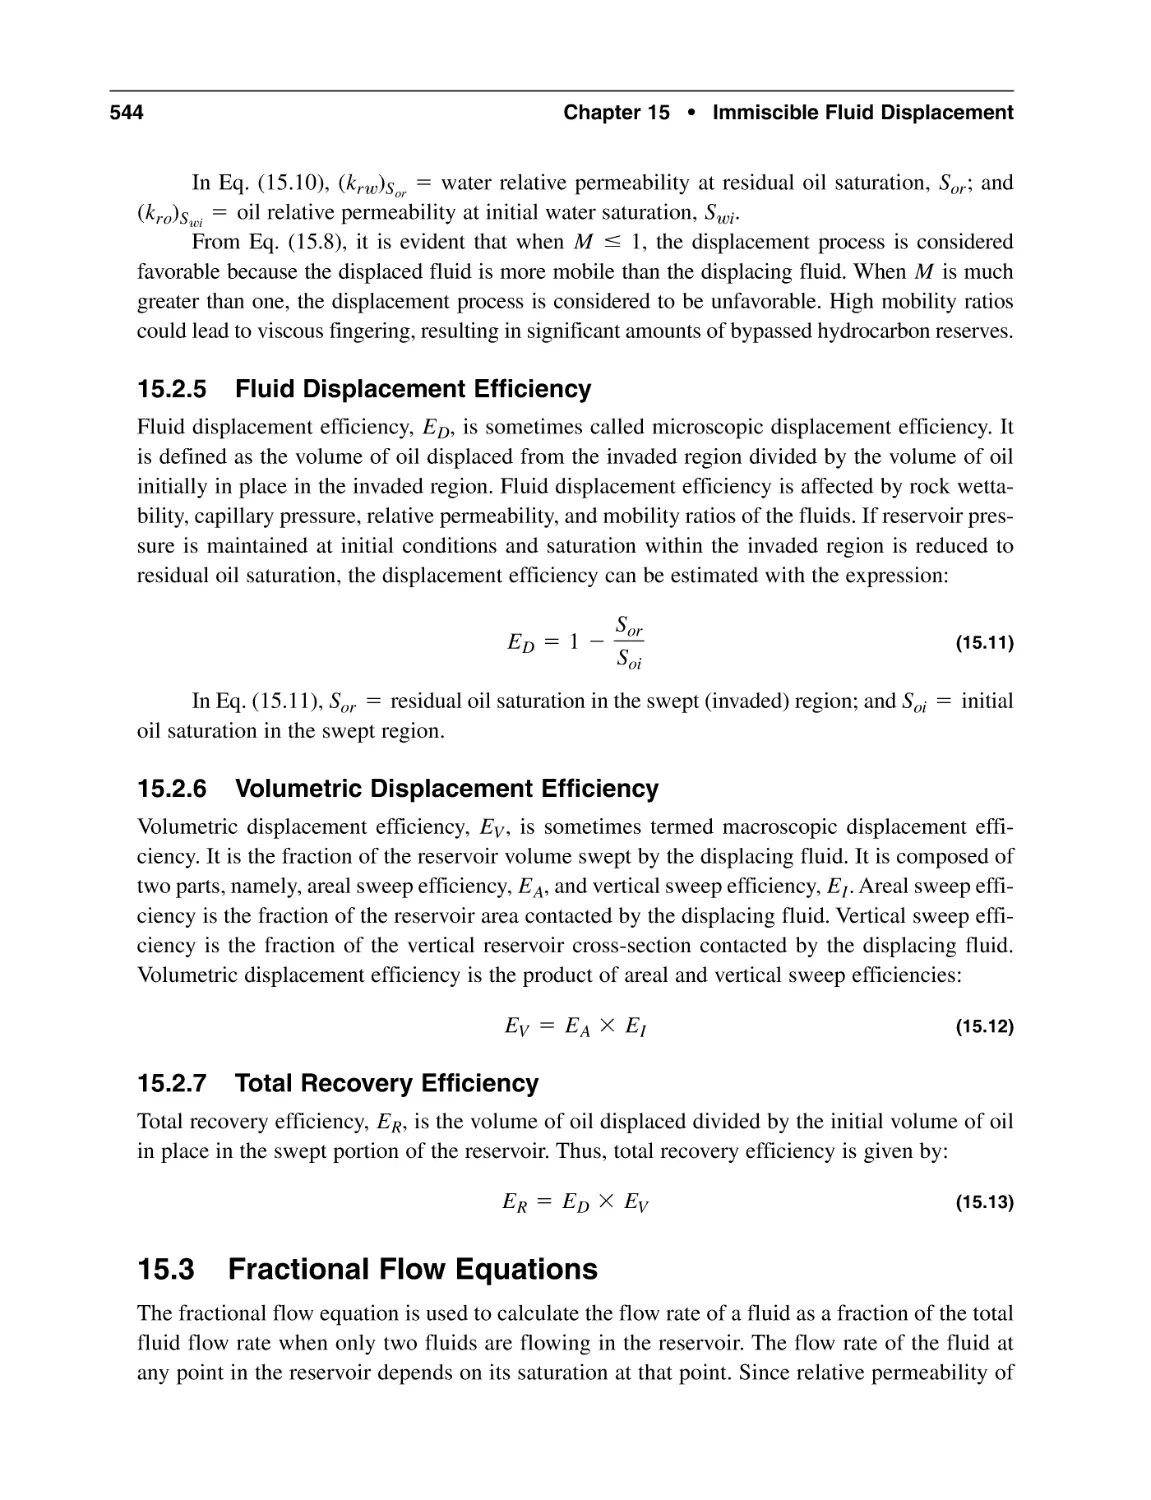 15.2.5 Fluid Displacement Efficiency
15.2.6 Volumetric Displacement Efficiency
15.2.7 Total Recovery Efficiency
15.3 Fractional Flow Equations